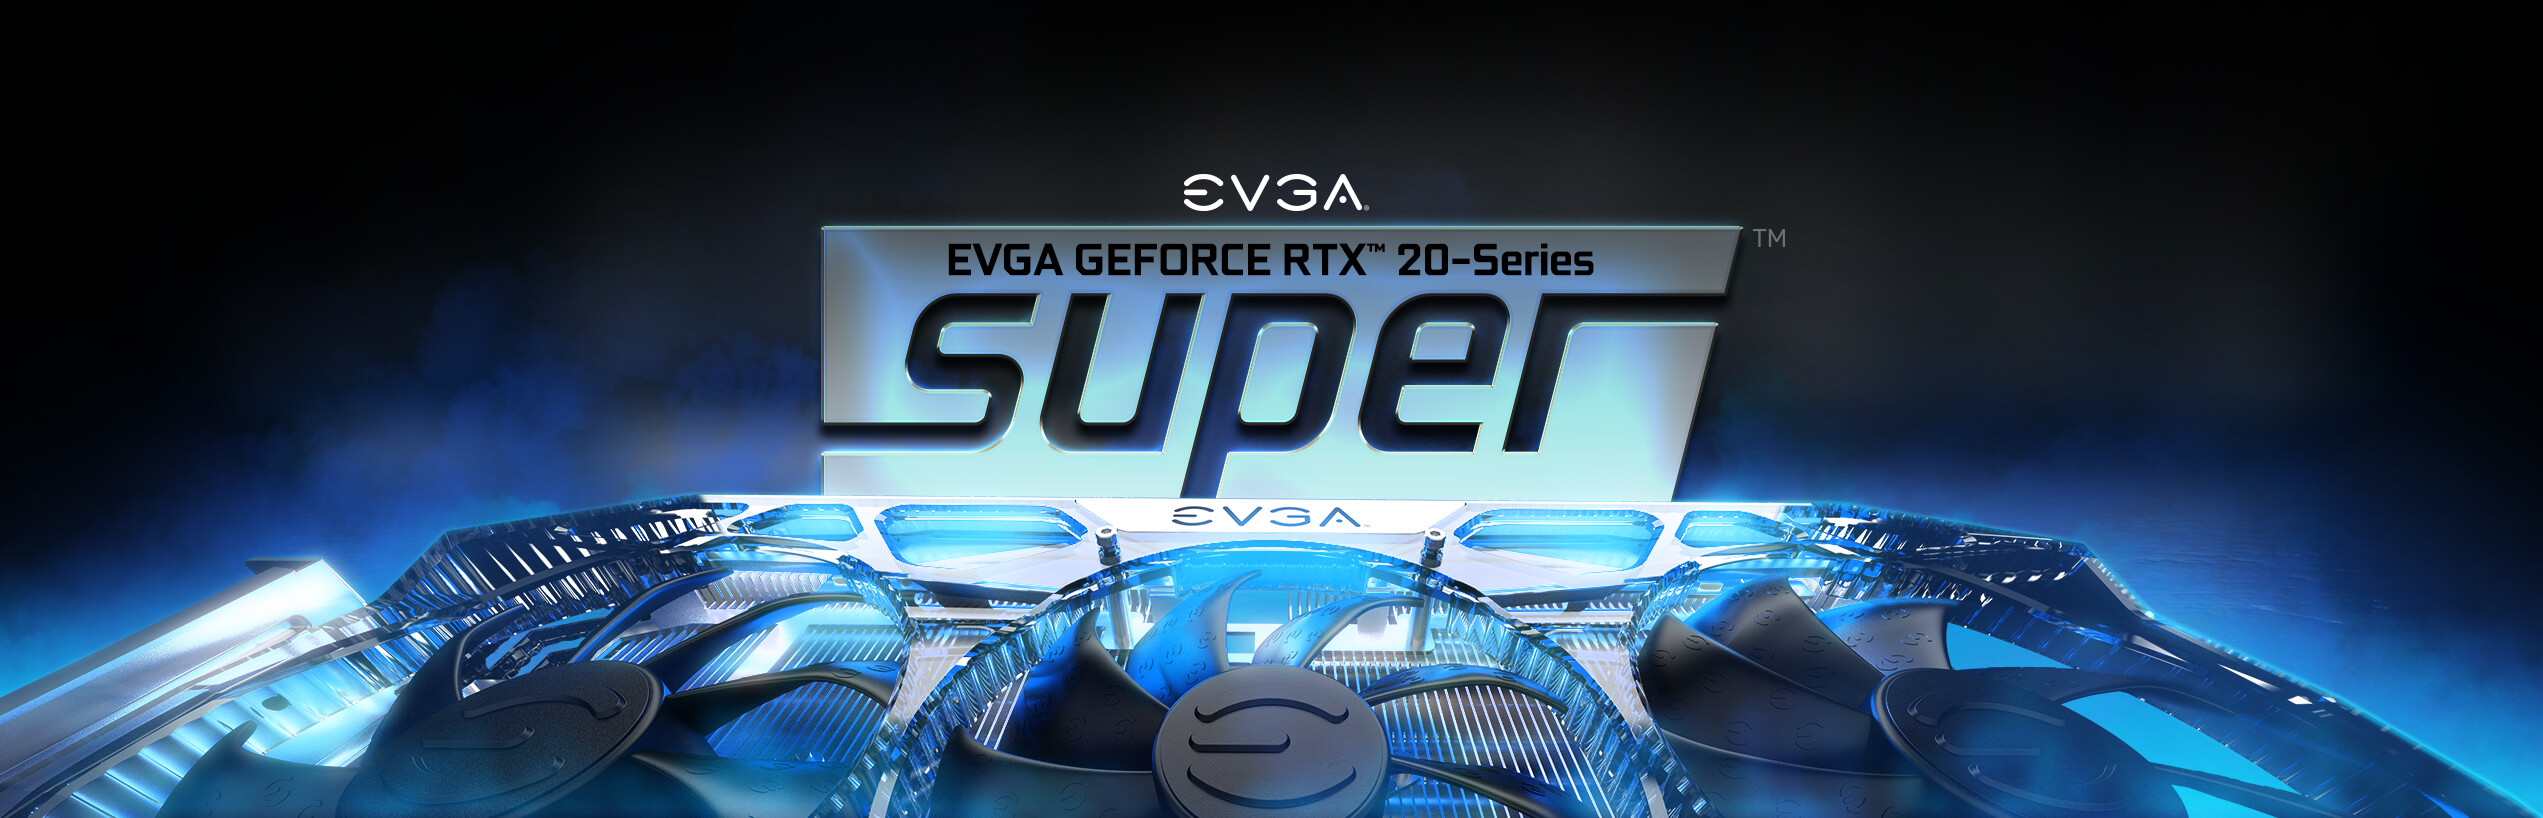 EVGA GeForce® RTX SUPER™